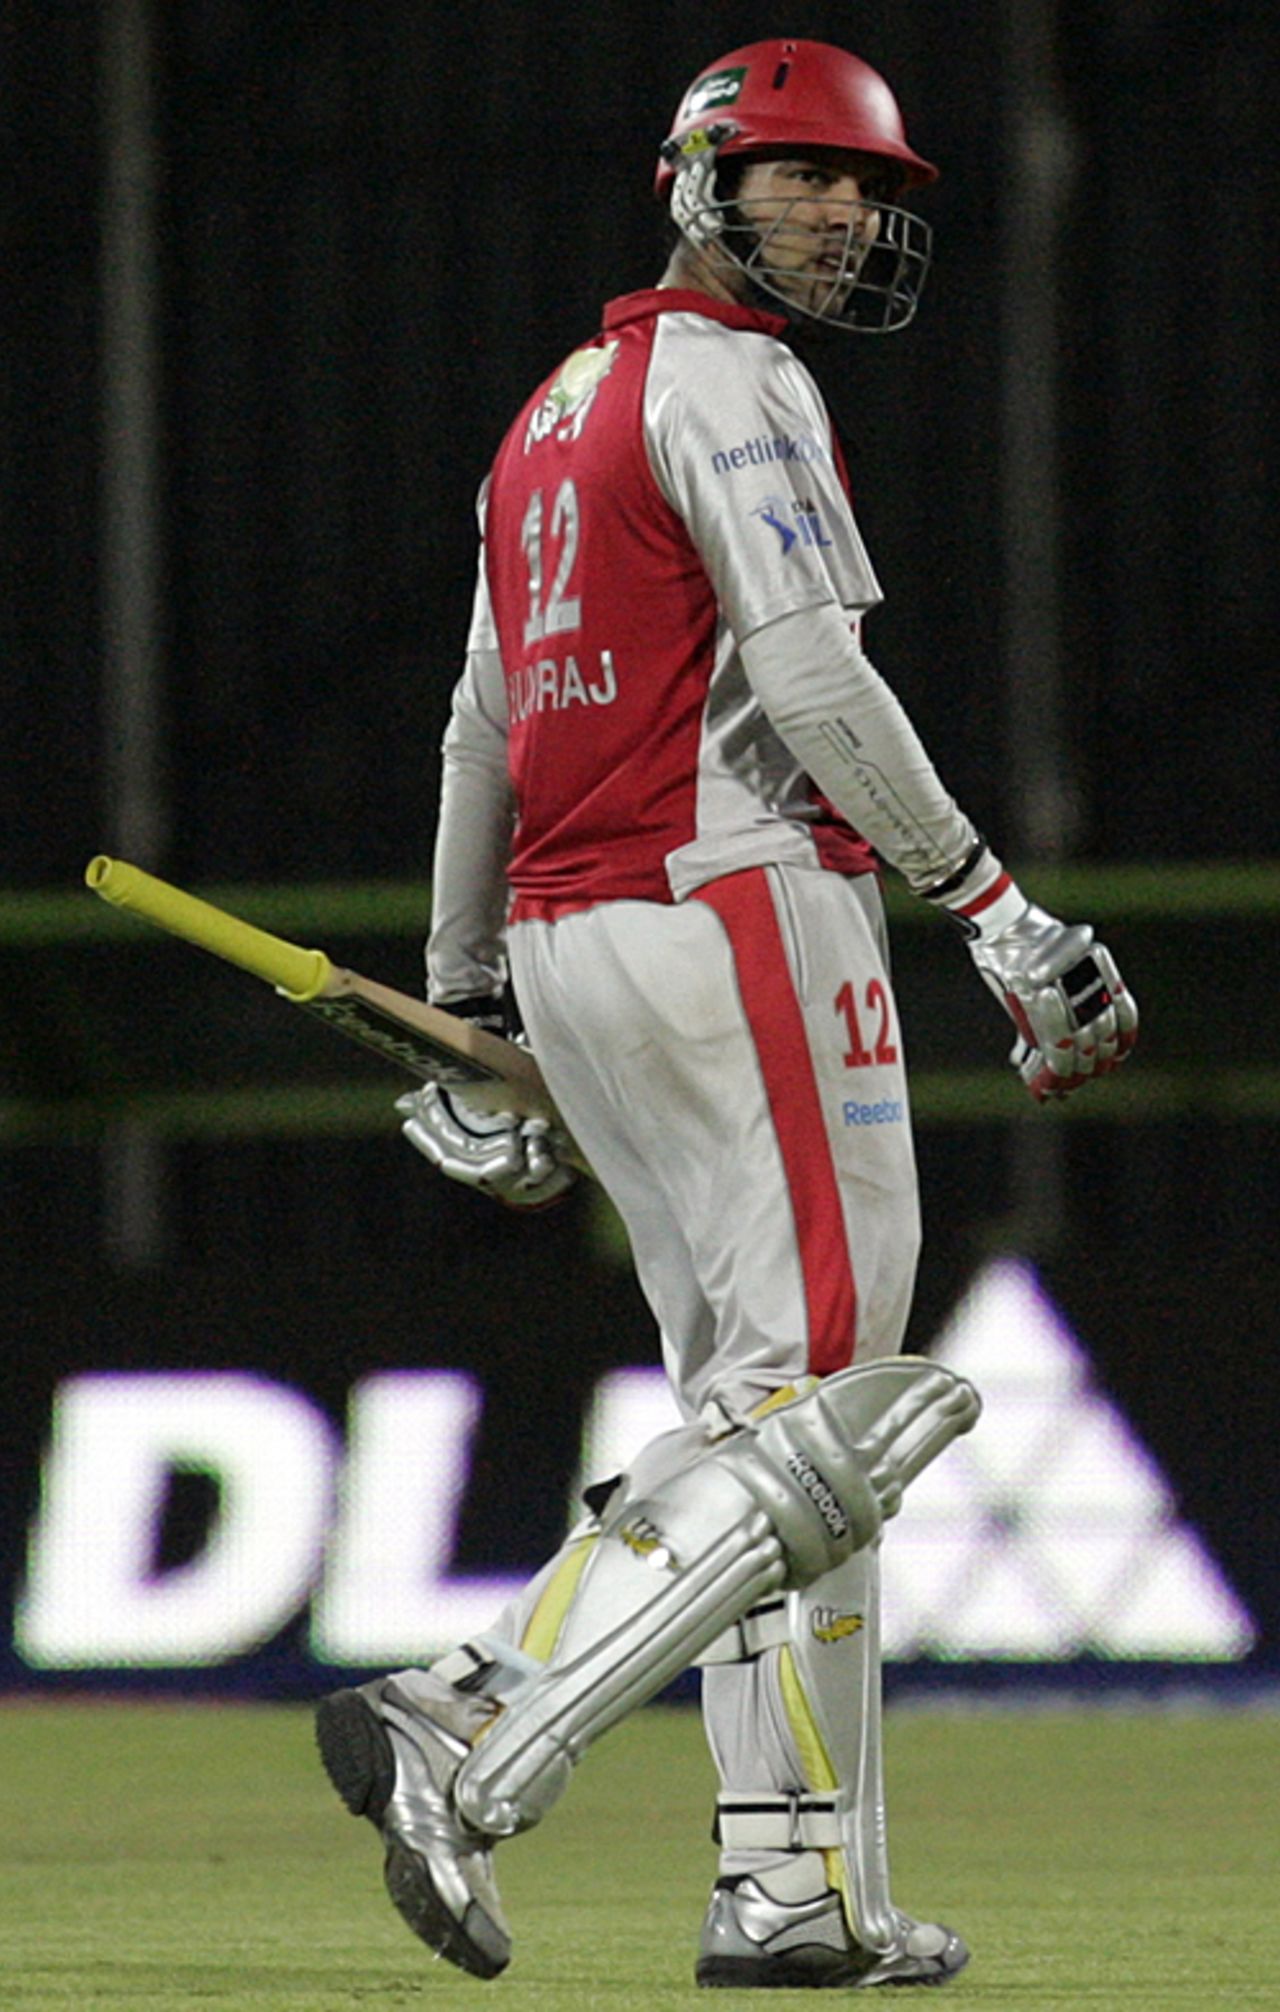 Yuvraj Singh exits after scoring a slow 18, Delhi Daredevils v Kings XI Punjab, 46th match, IPL, Bloemfontein, May 15, 2009